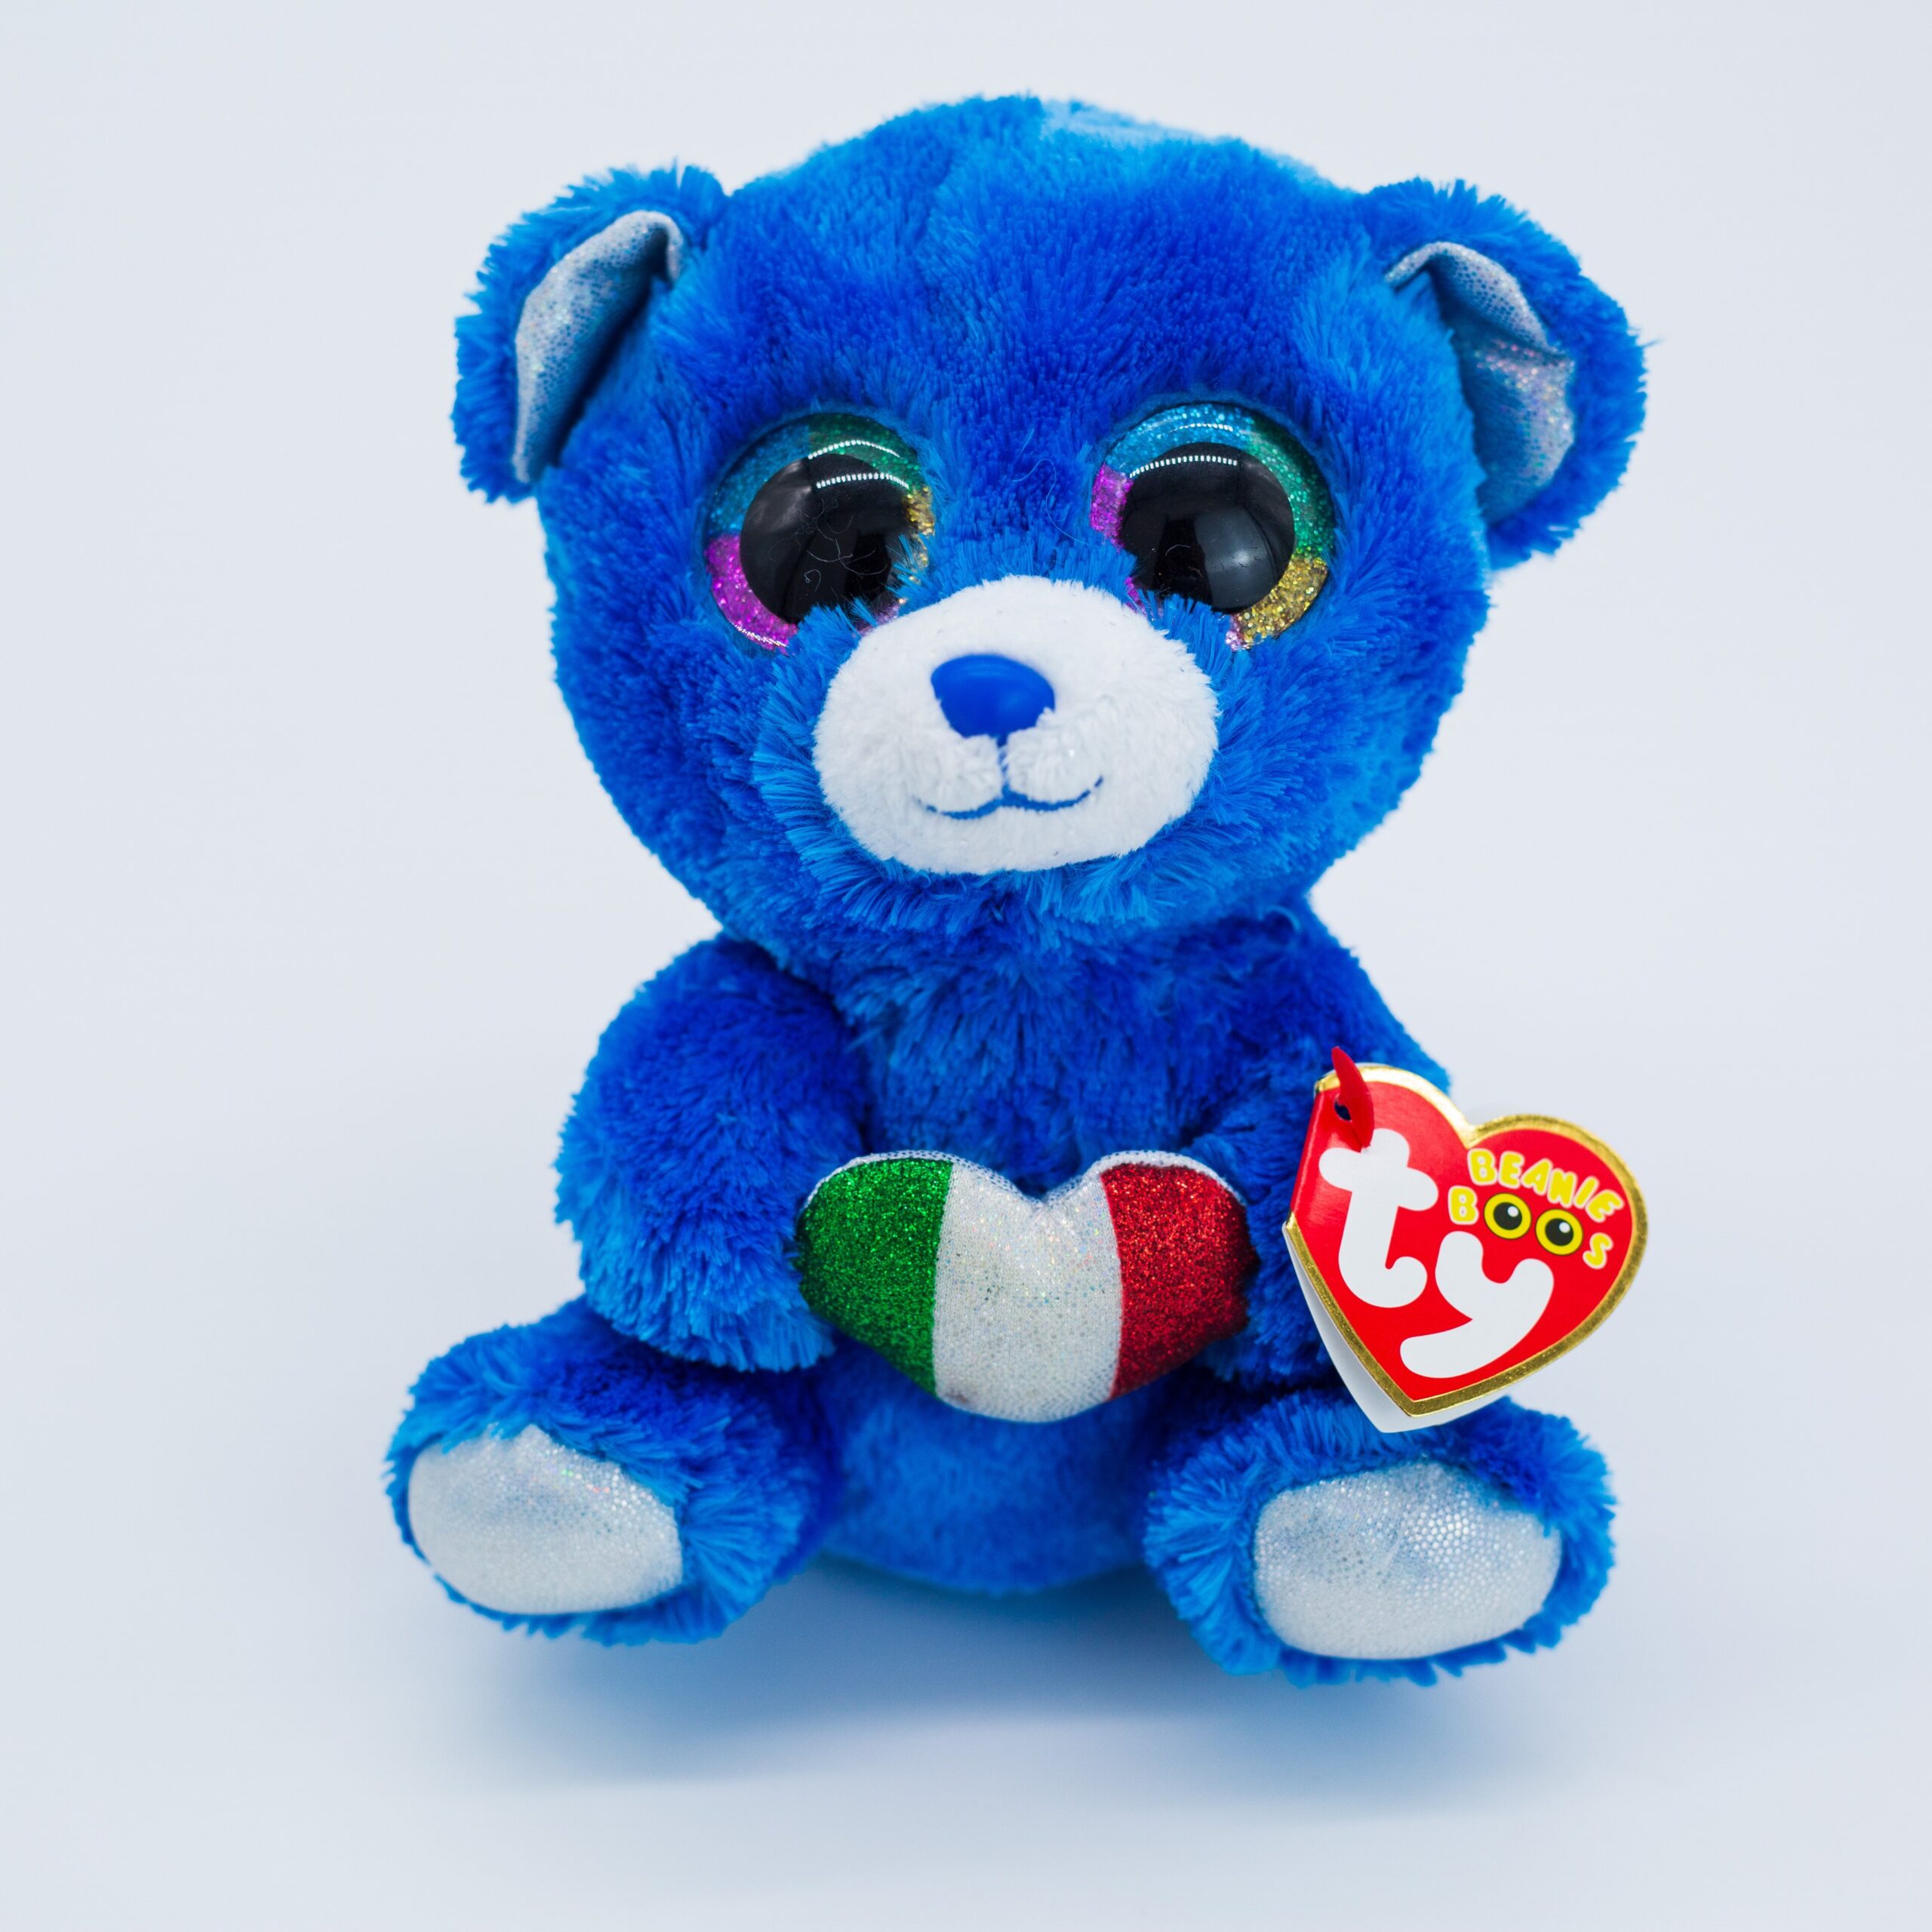 Premium Photo  Beautiful teddy bear with big eyes on a blue